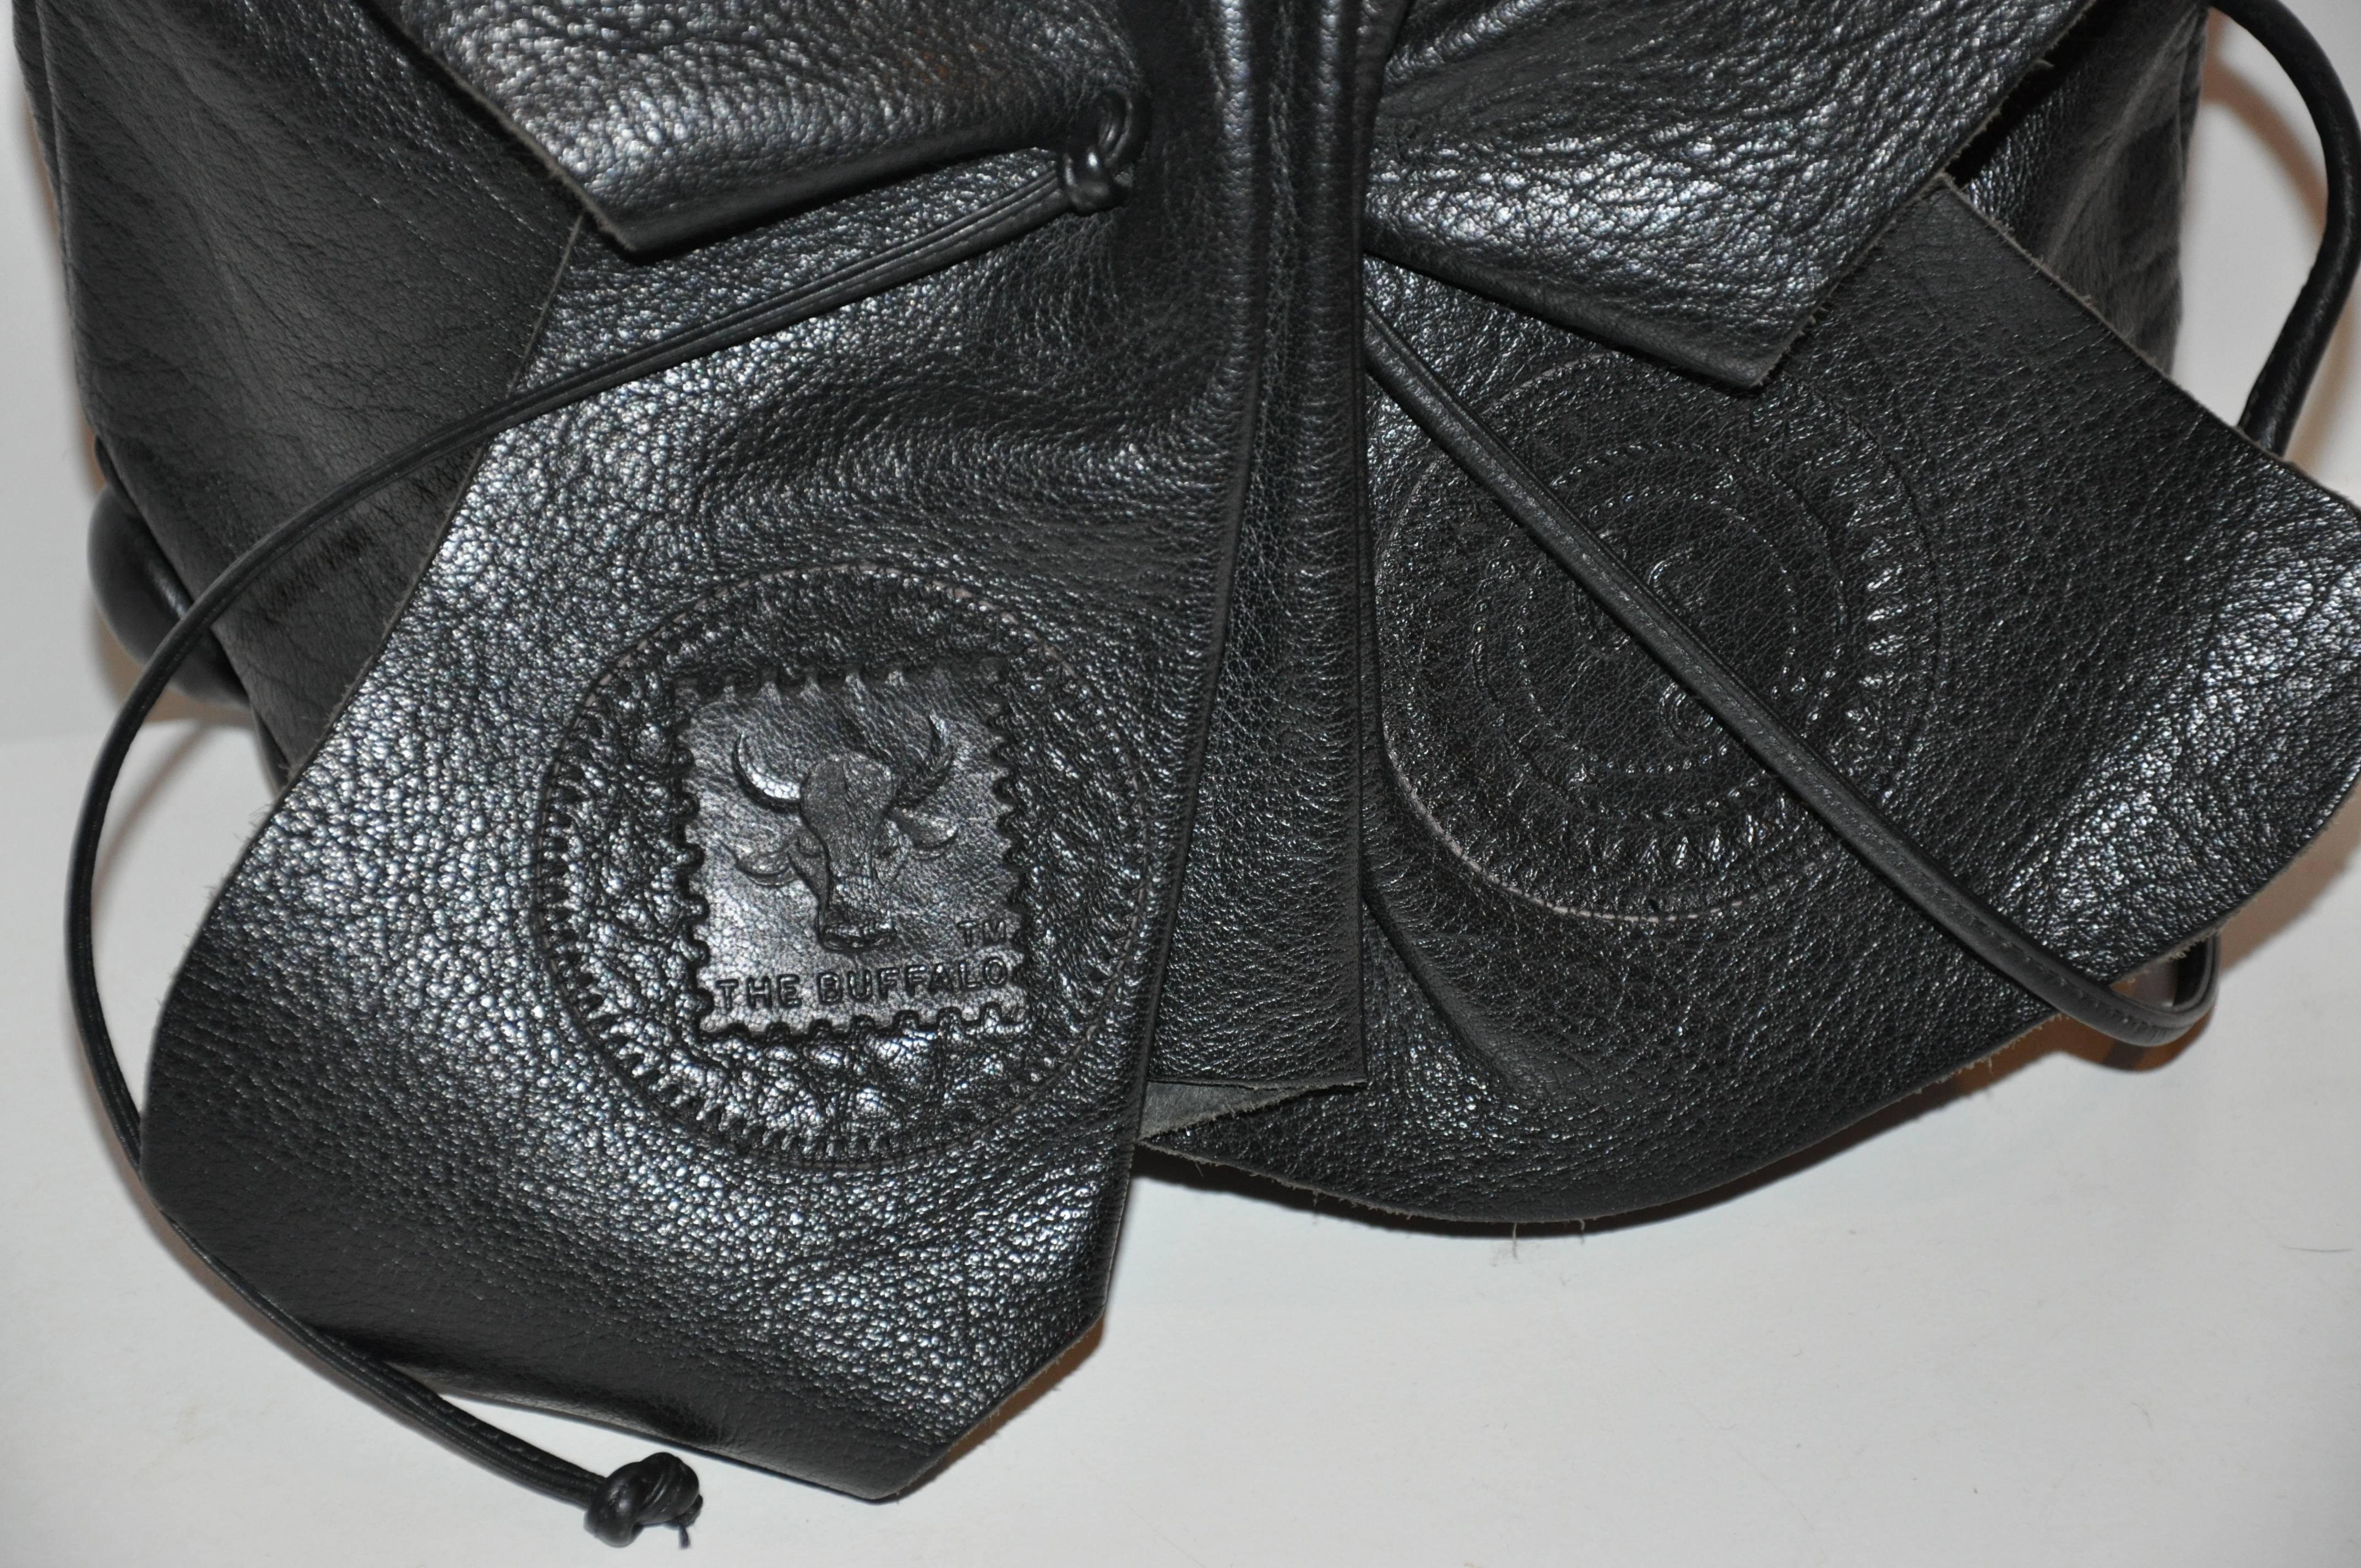           Carlos Falchi's signature black textured calfskin adjustable drawstring shoulder bag measures 9